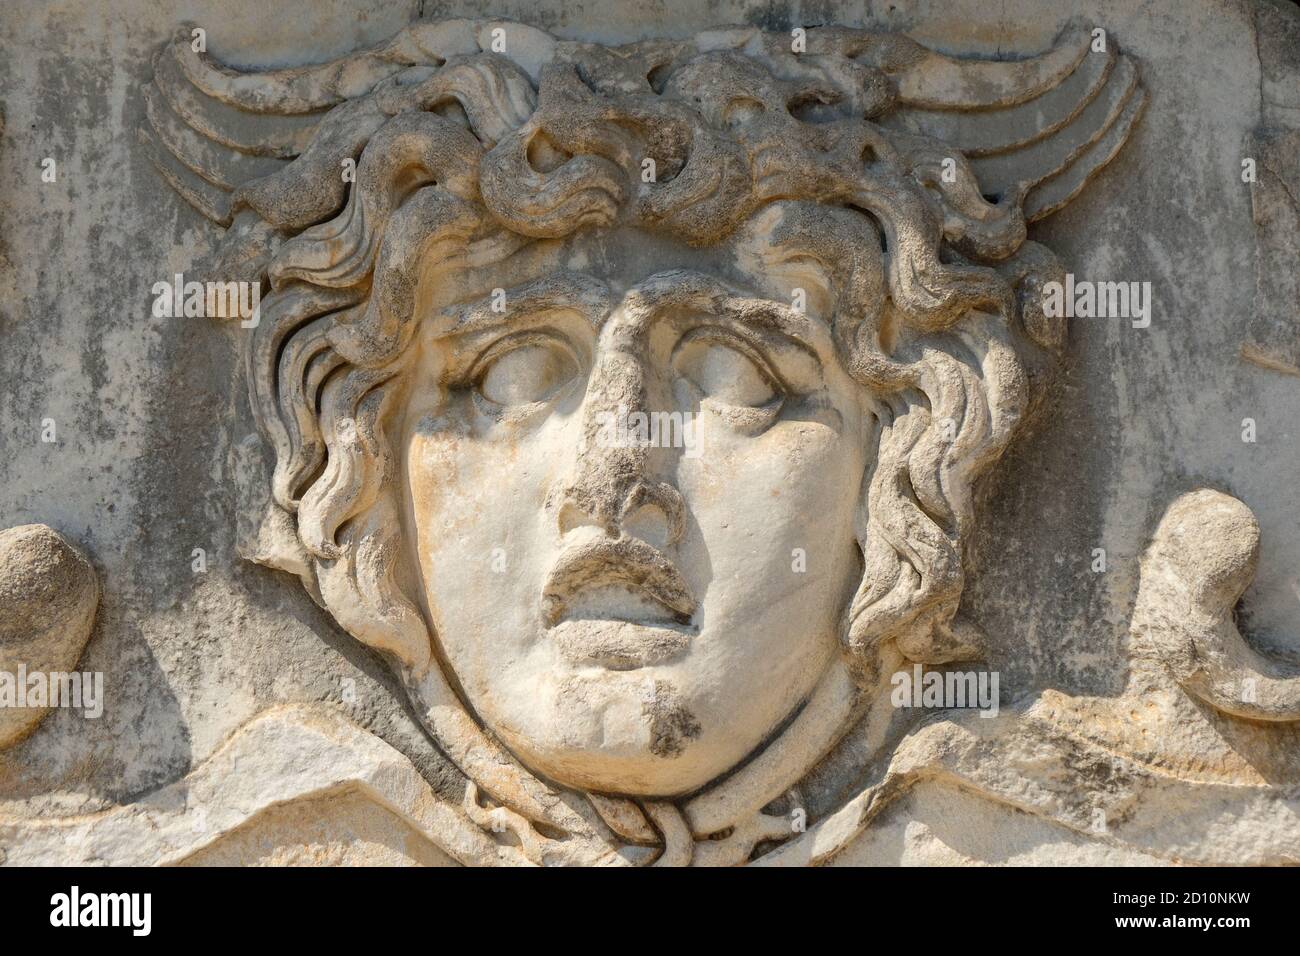 Rostro del hombre - relieve griego antiguo - esculturas en pared - Templo de Apolo Foto de stock